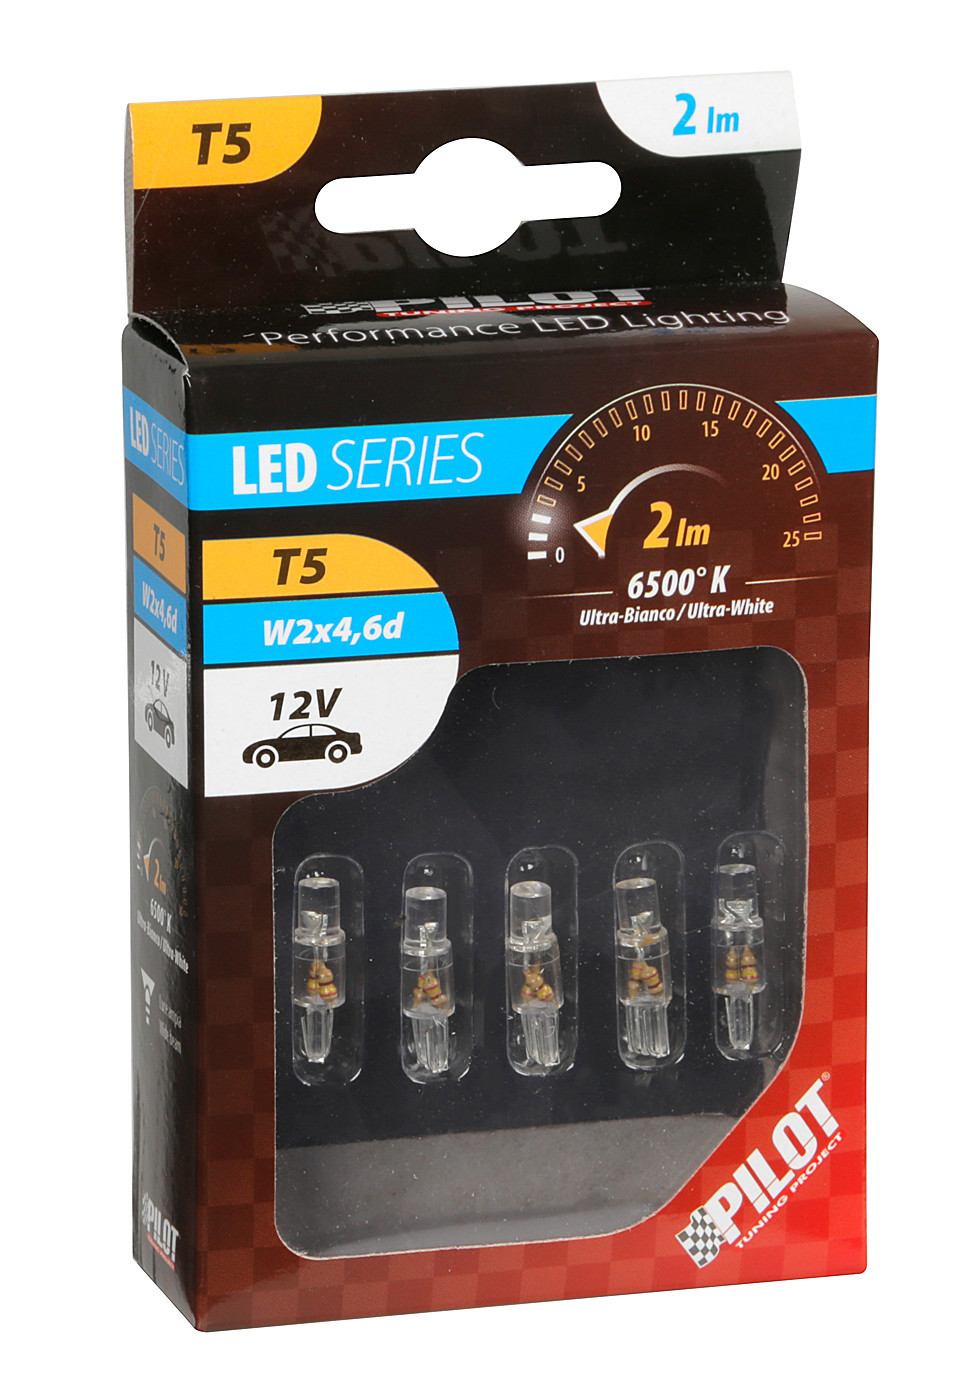 Bec tip LED 12V iluminat bord soclu pl. T5 W2x4,6d 5buc- Alb thumb